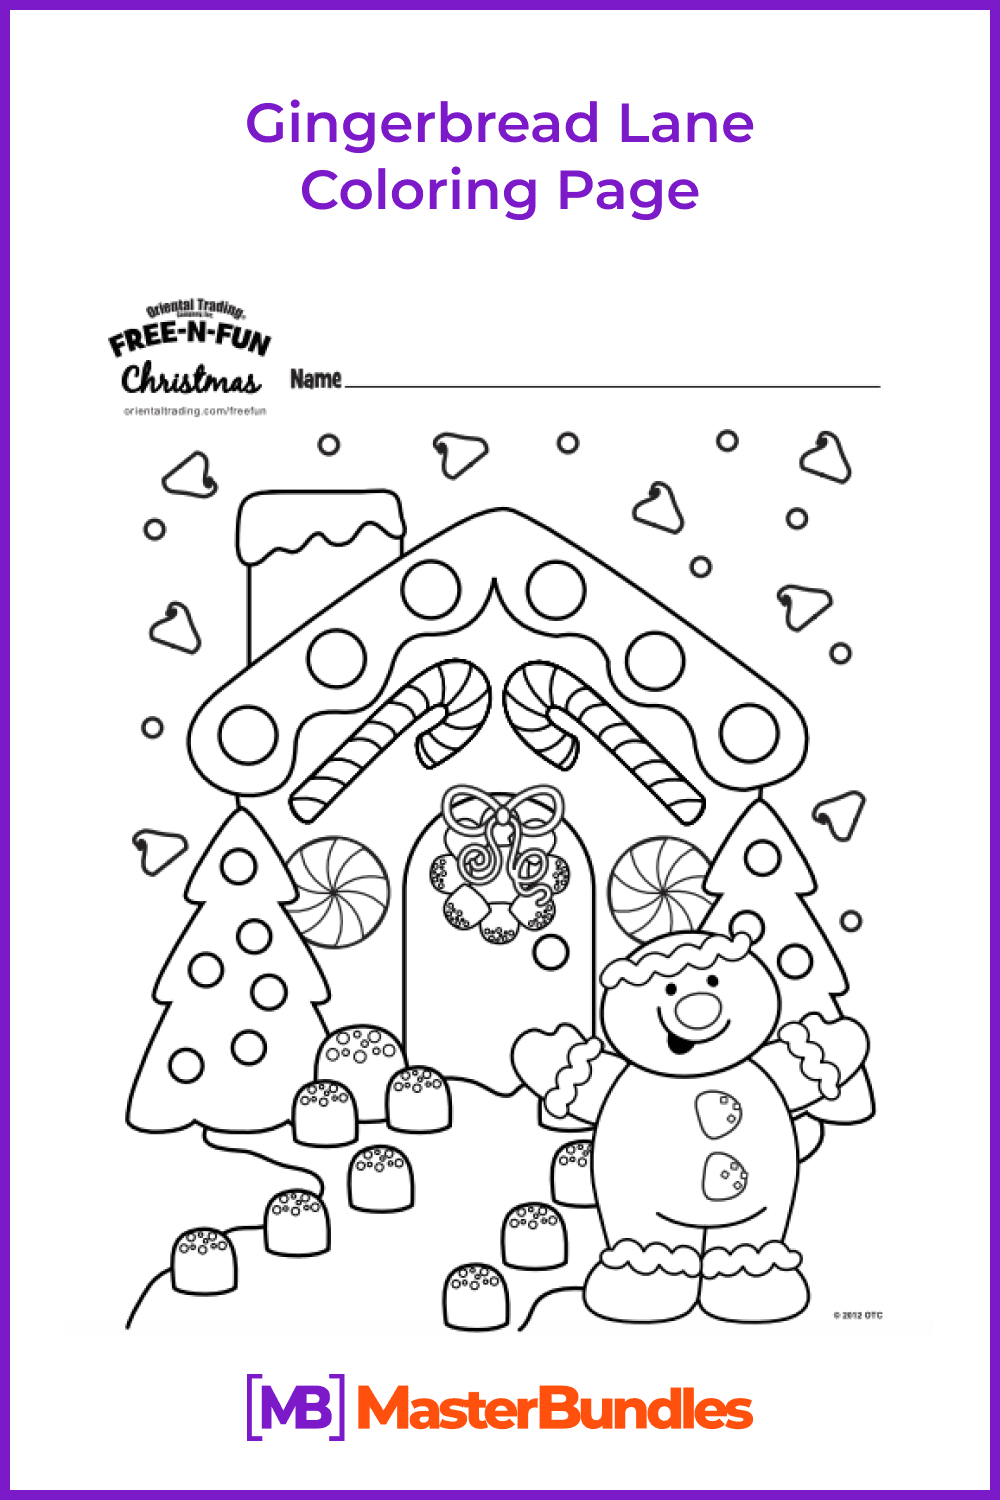 Gingerbread lane coloring page pinterest image.